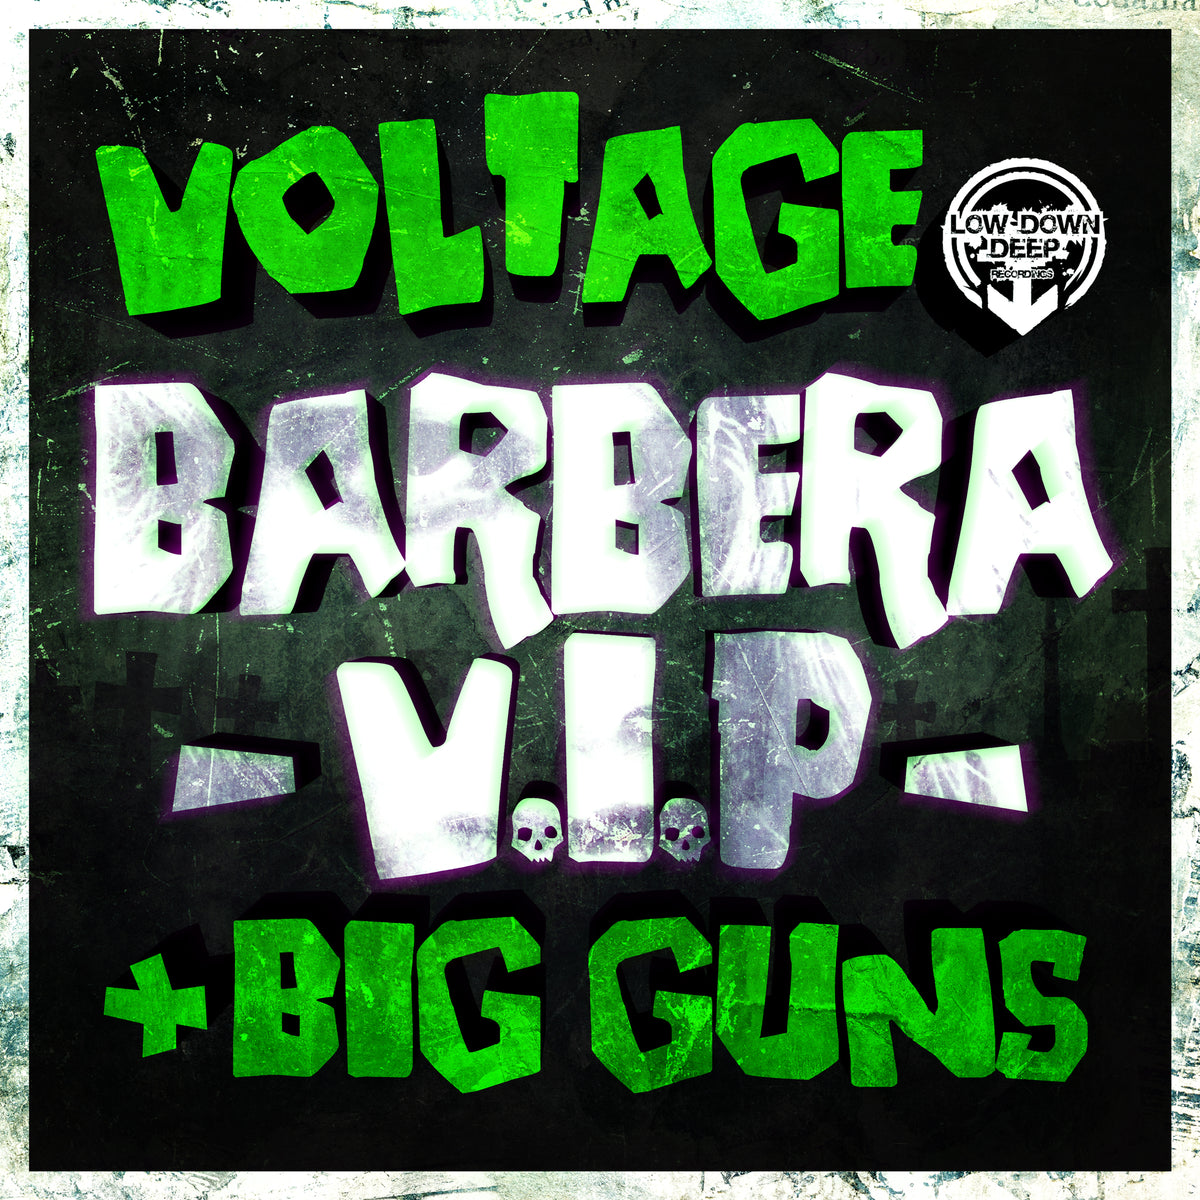 LDD 119 - Voltage 'Barbera Vip' | 'Big Guns'